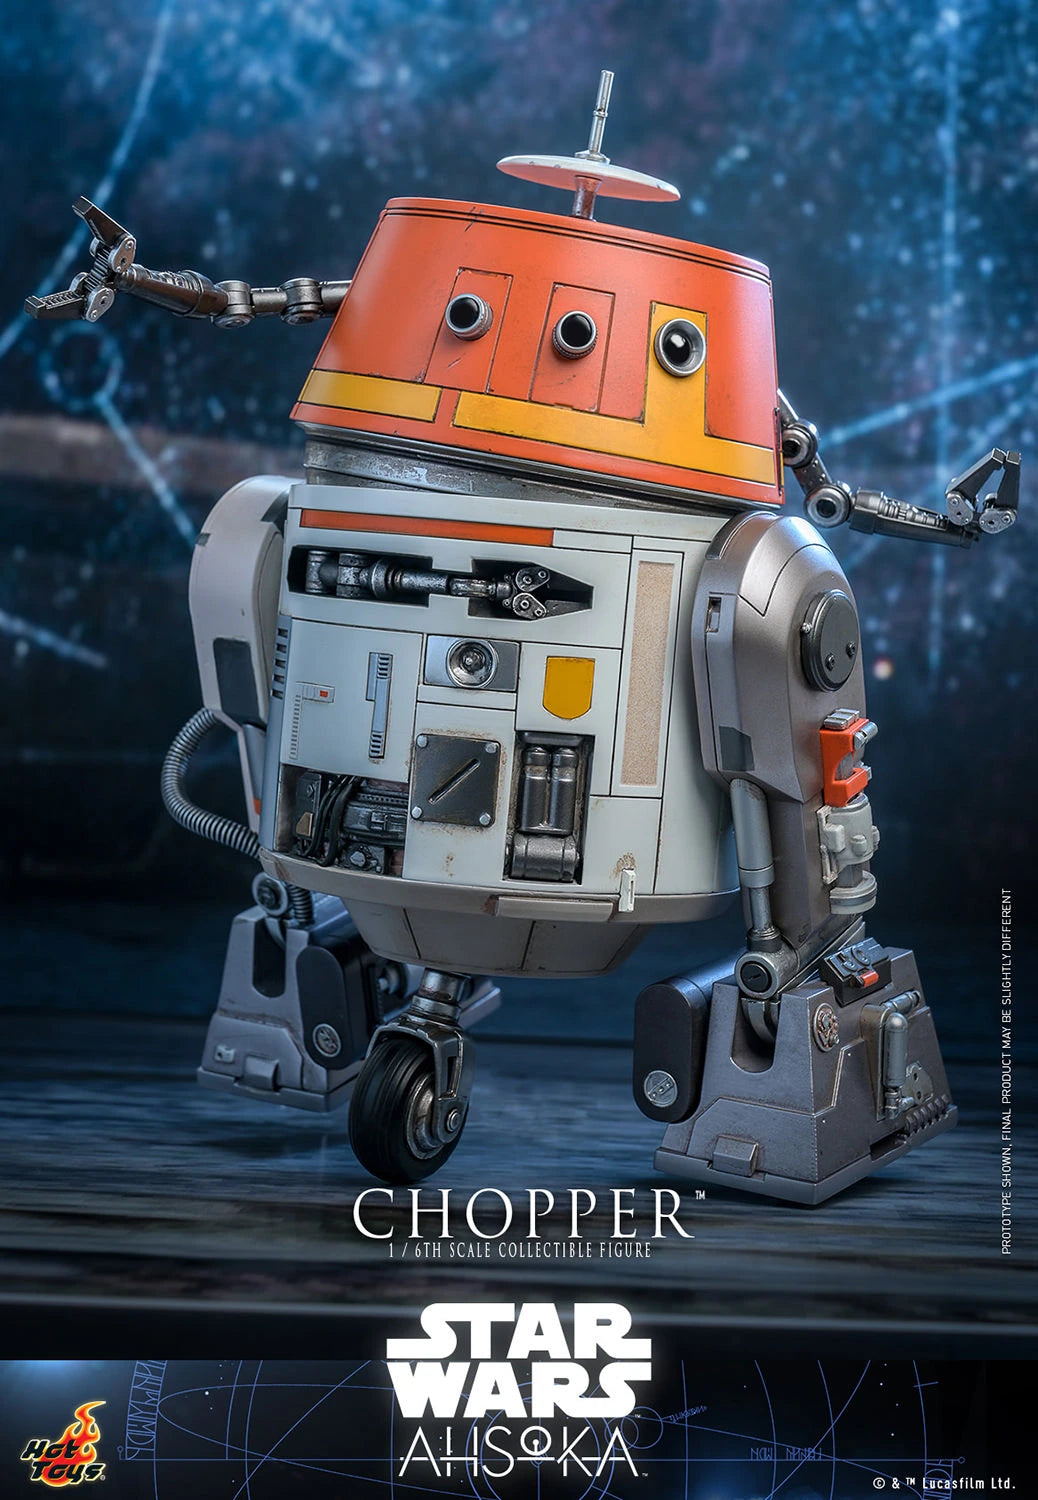 Hot Toys Star Wars Ahsoka Series C1-10P Chopper 1/6th Scale Figure